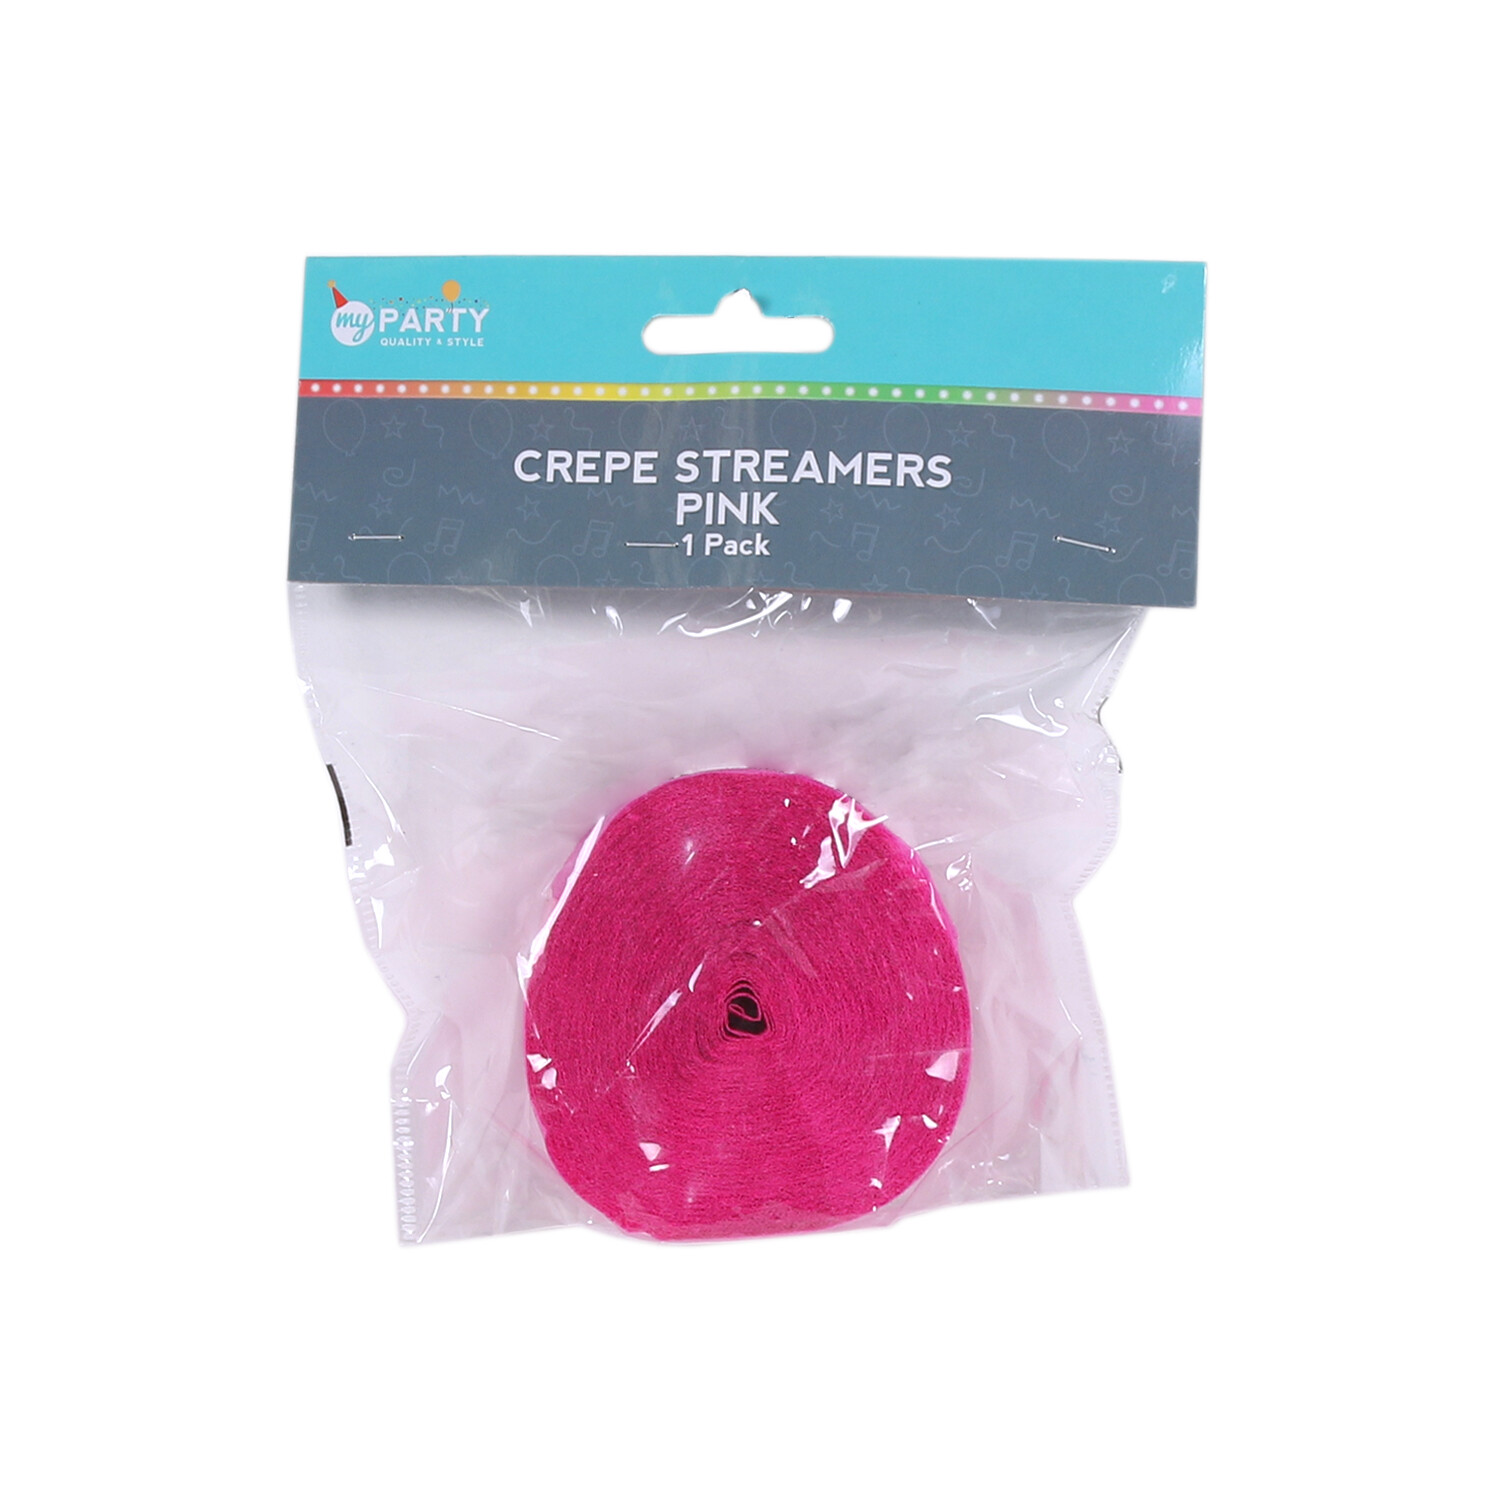 Crepe Streamer Roll - Pink Image